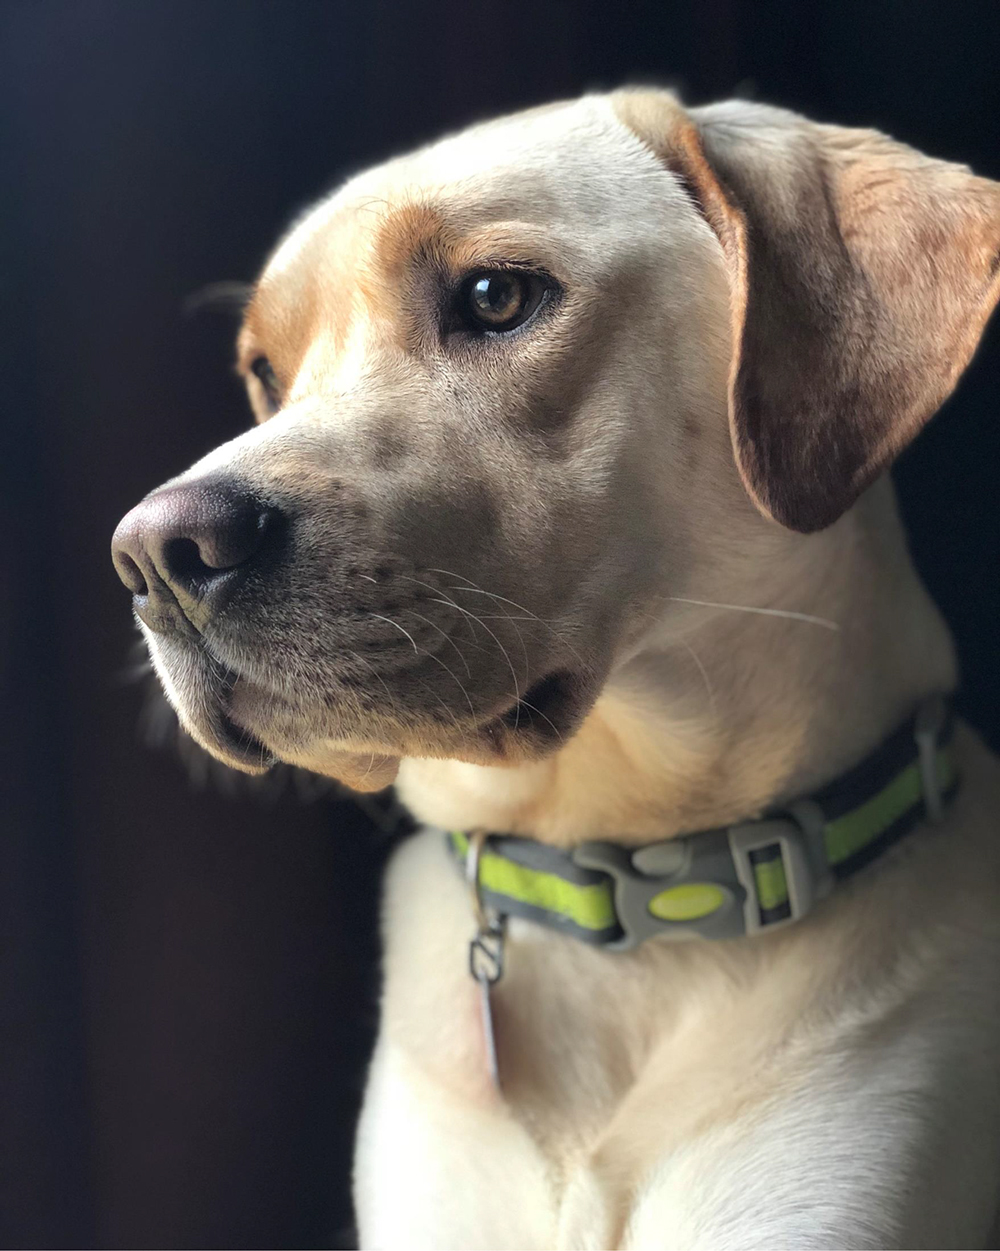 A close-up head shot of a golden labrador dog named Cooper